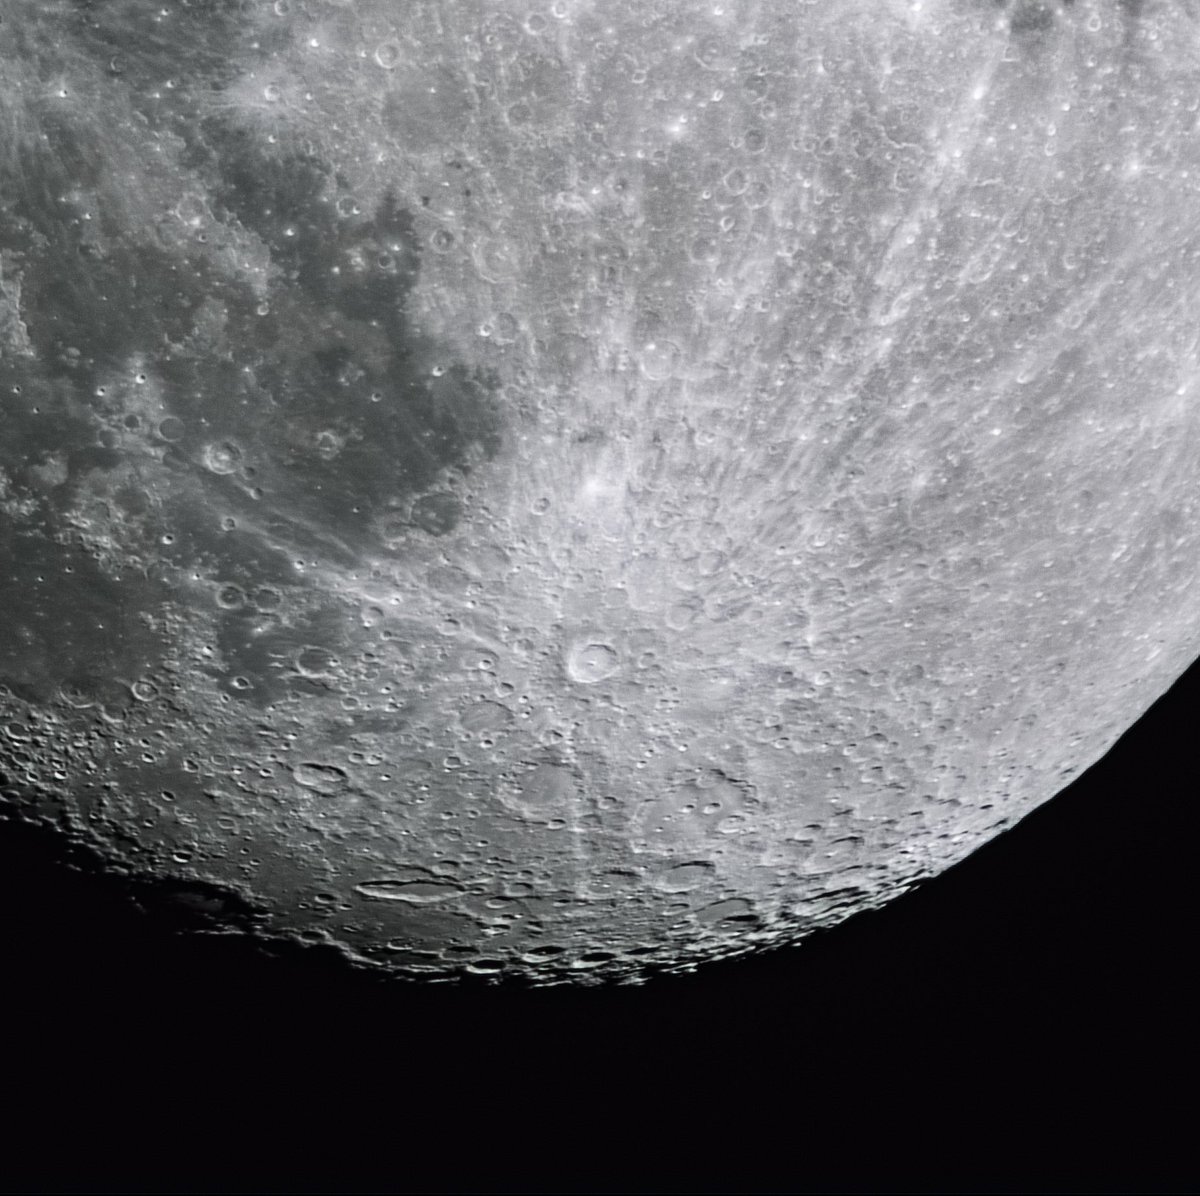 Saturday's waxing gibbous moon. 
Best 150 of 800 frames.
#MoonHour 
#TYCHOCRATER